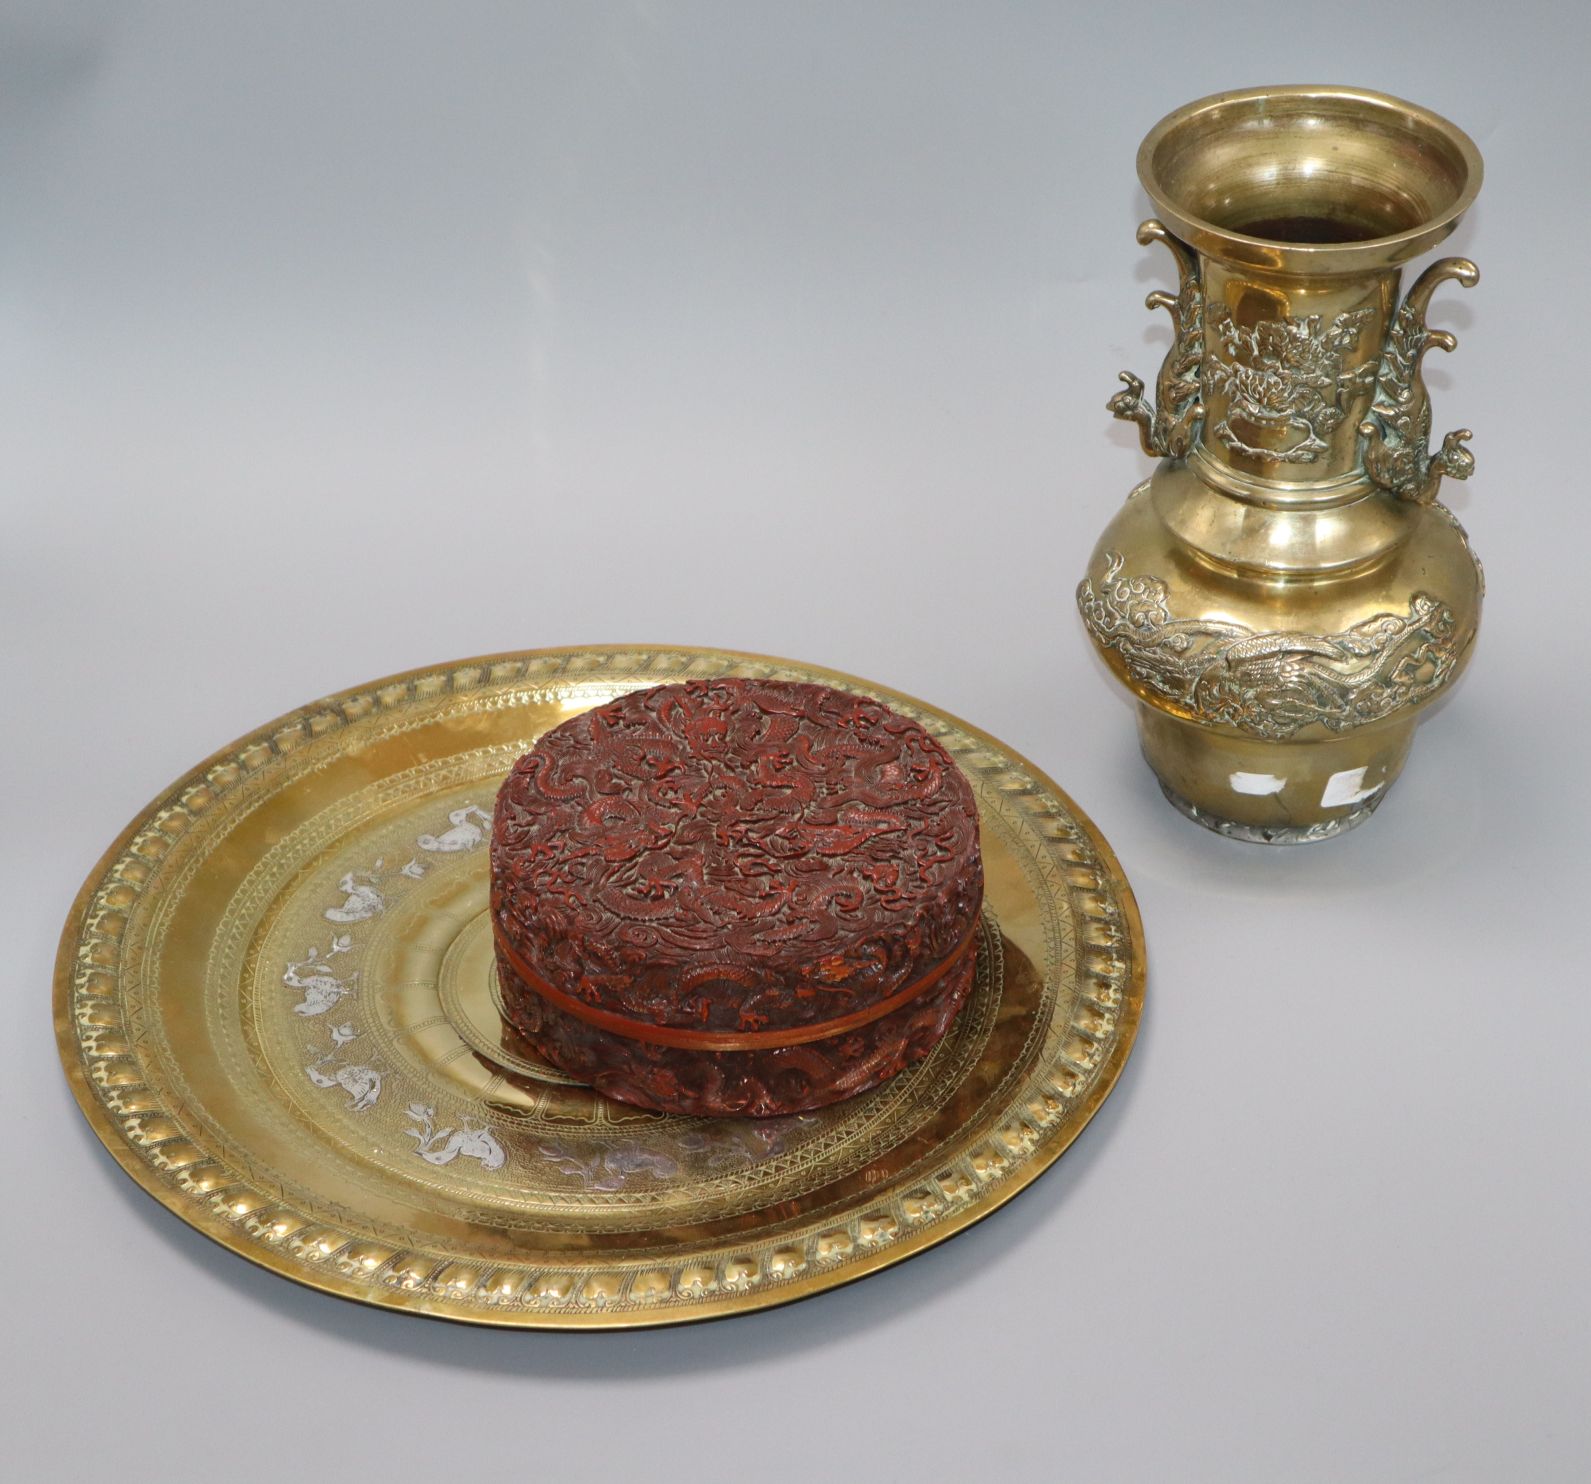 A Chinese bronze vase, a Persian dish and a 'Dragon' box dish diameter 36cm